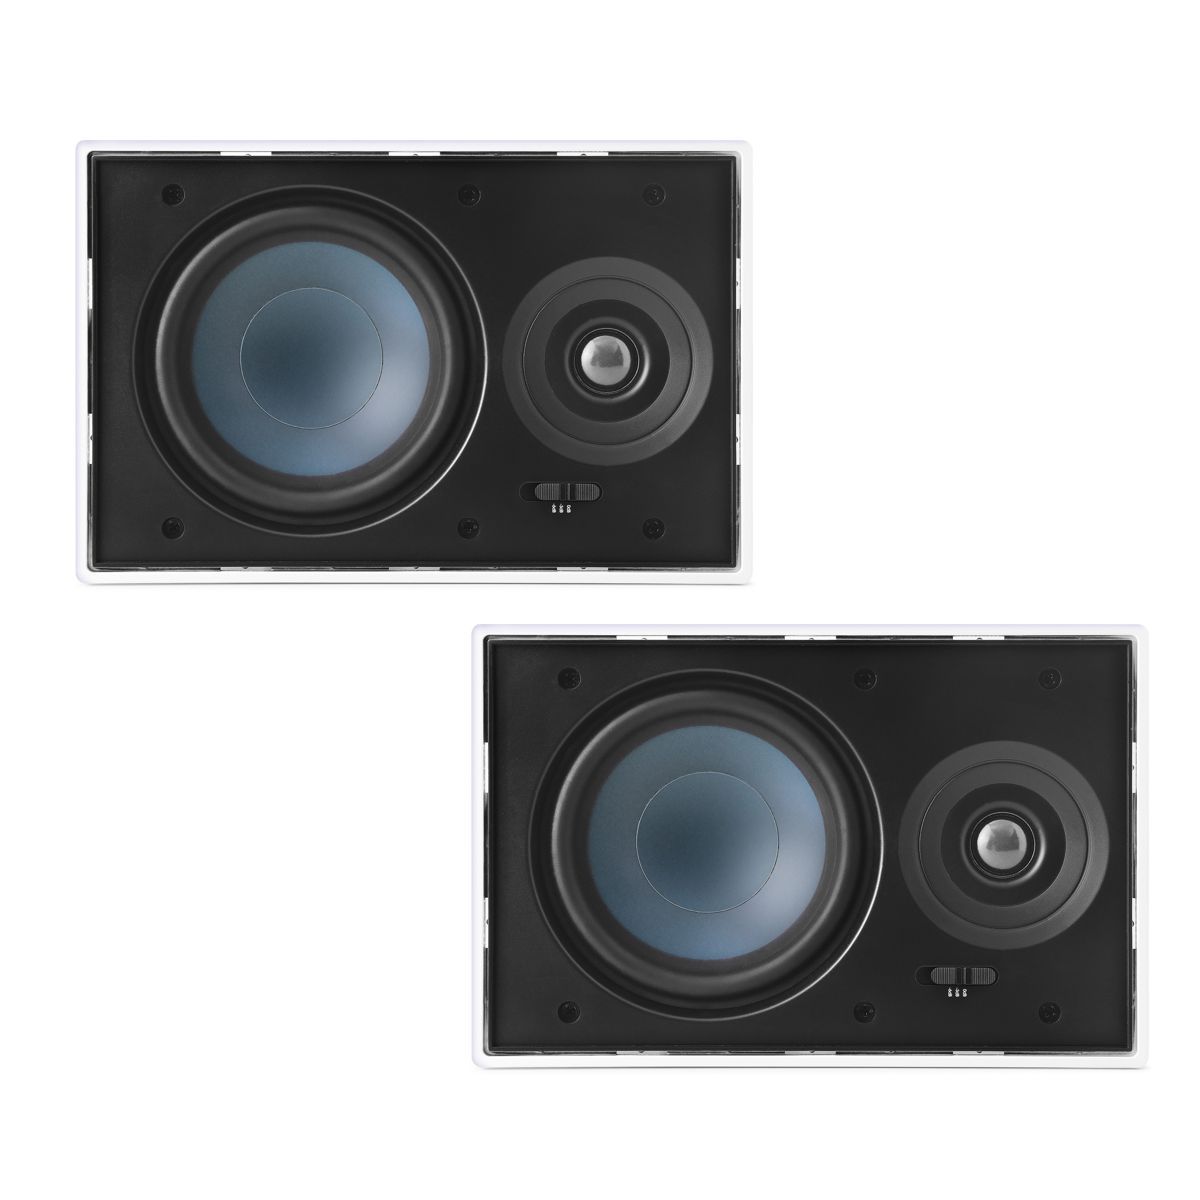 Kit 5.1.2 Dolby Atmos Caixa Acústica de Embutir LCR-A100 + LR-E100 + NQ6-M100 + Subwoofer Compact Cube 10 AAT